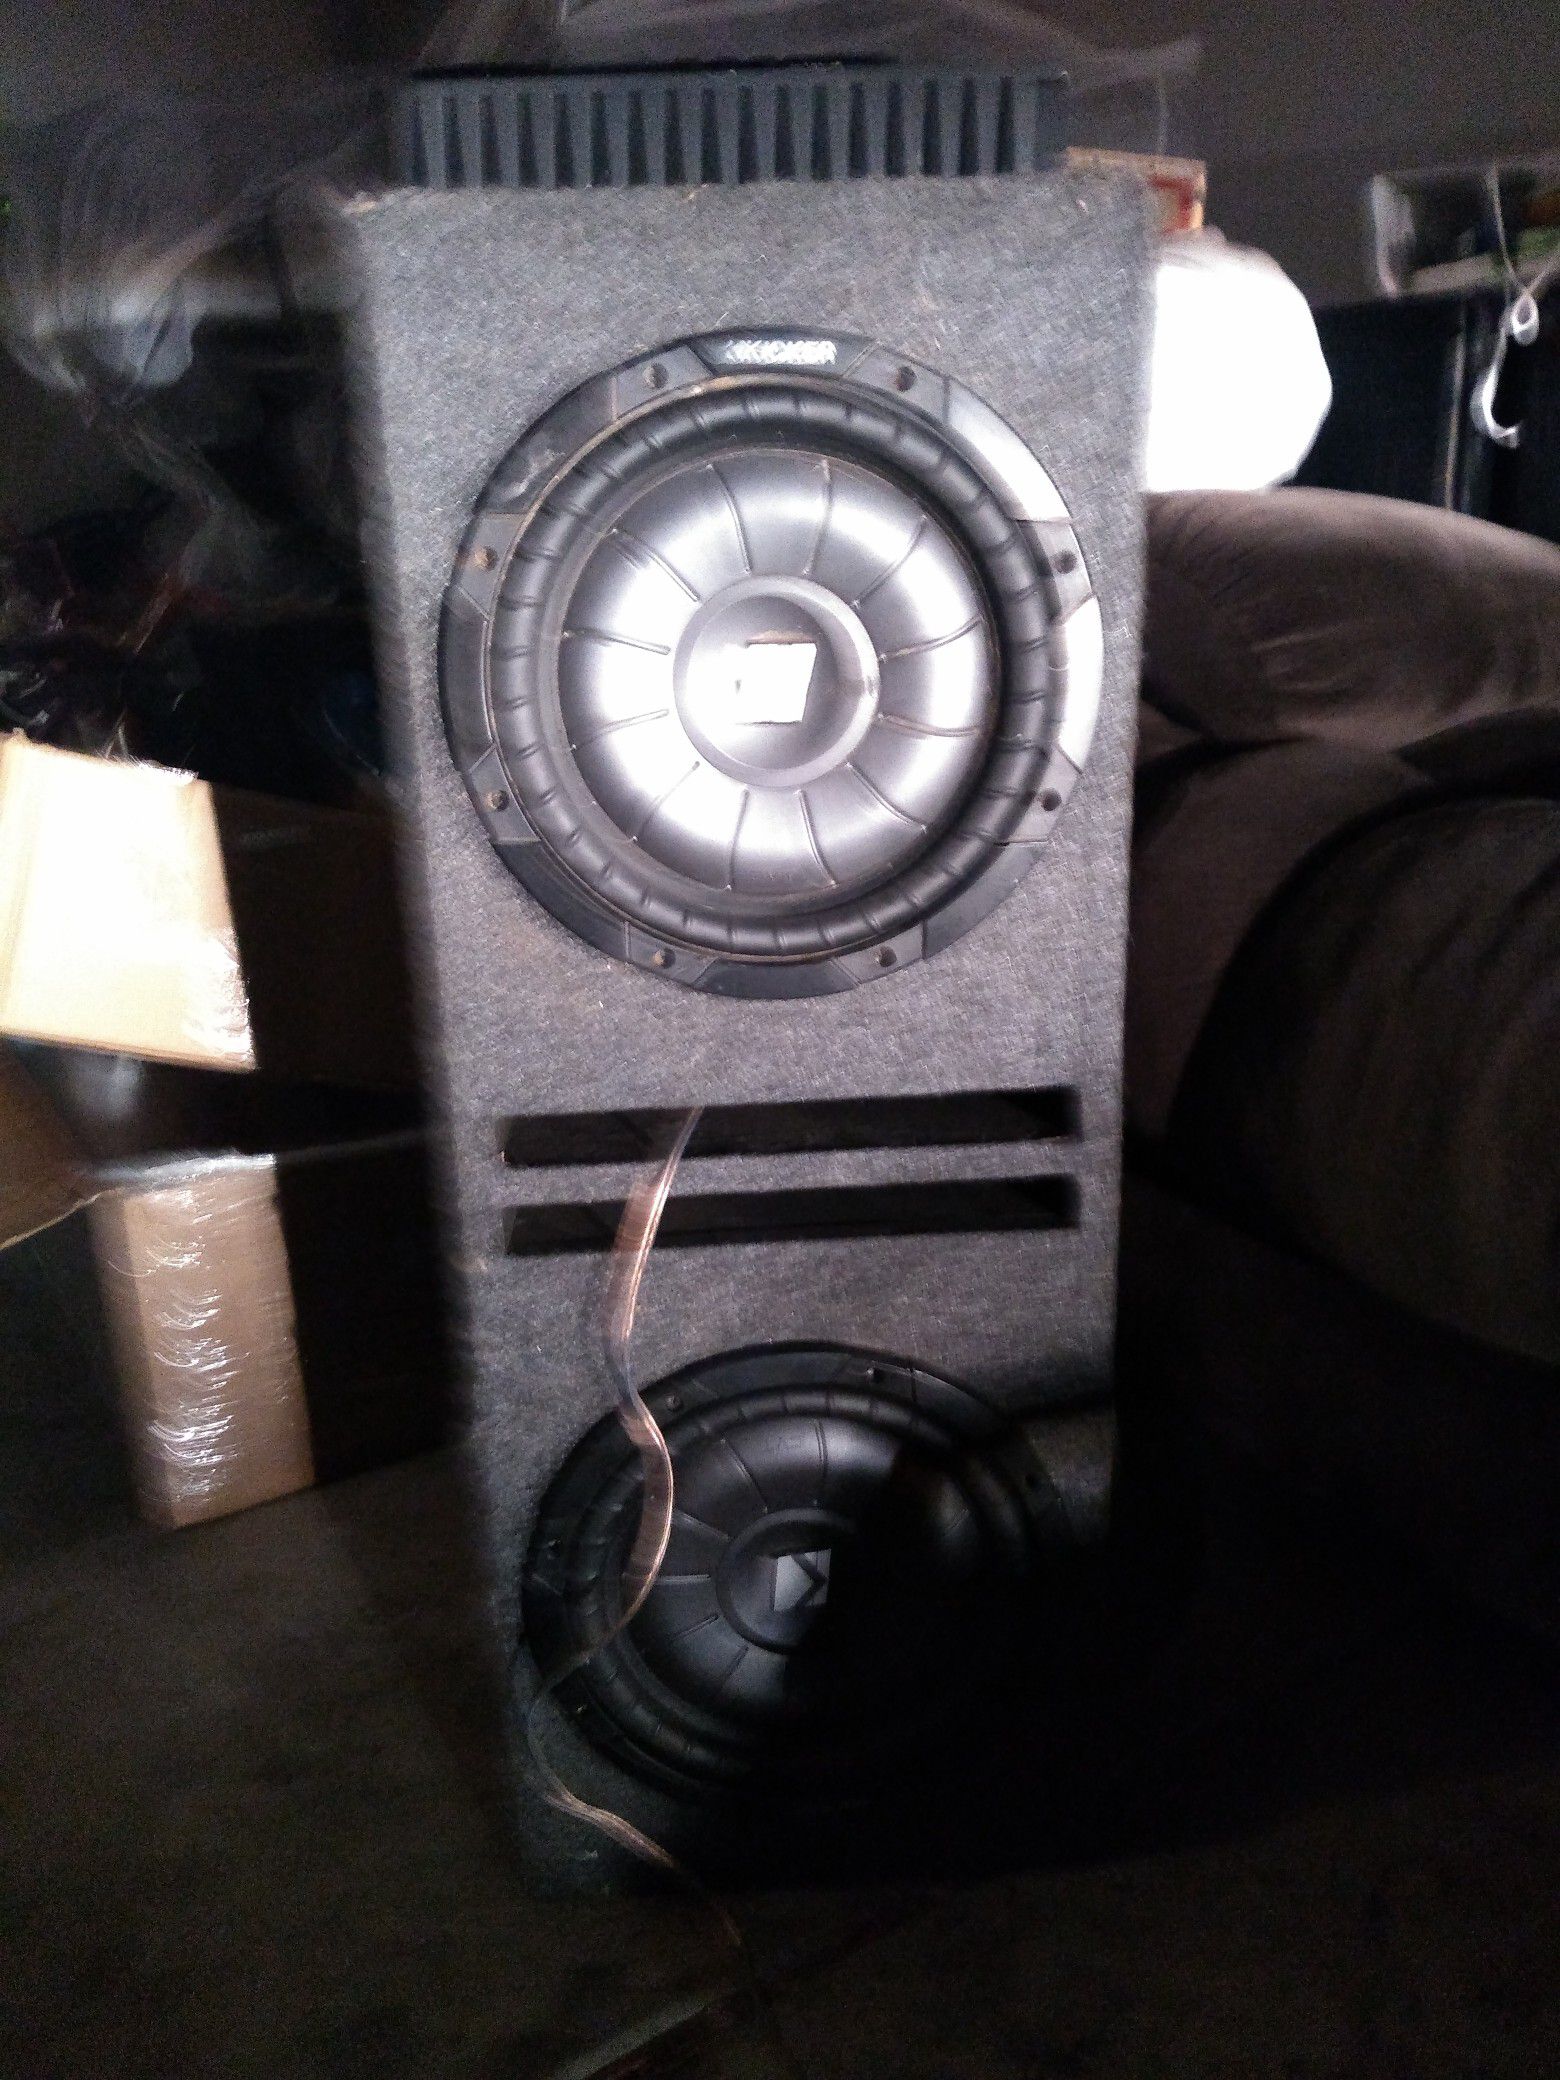 Kicker 10 inch with speaker